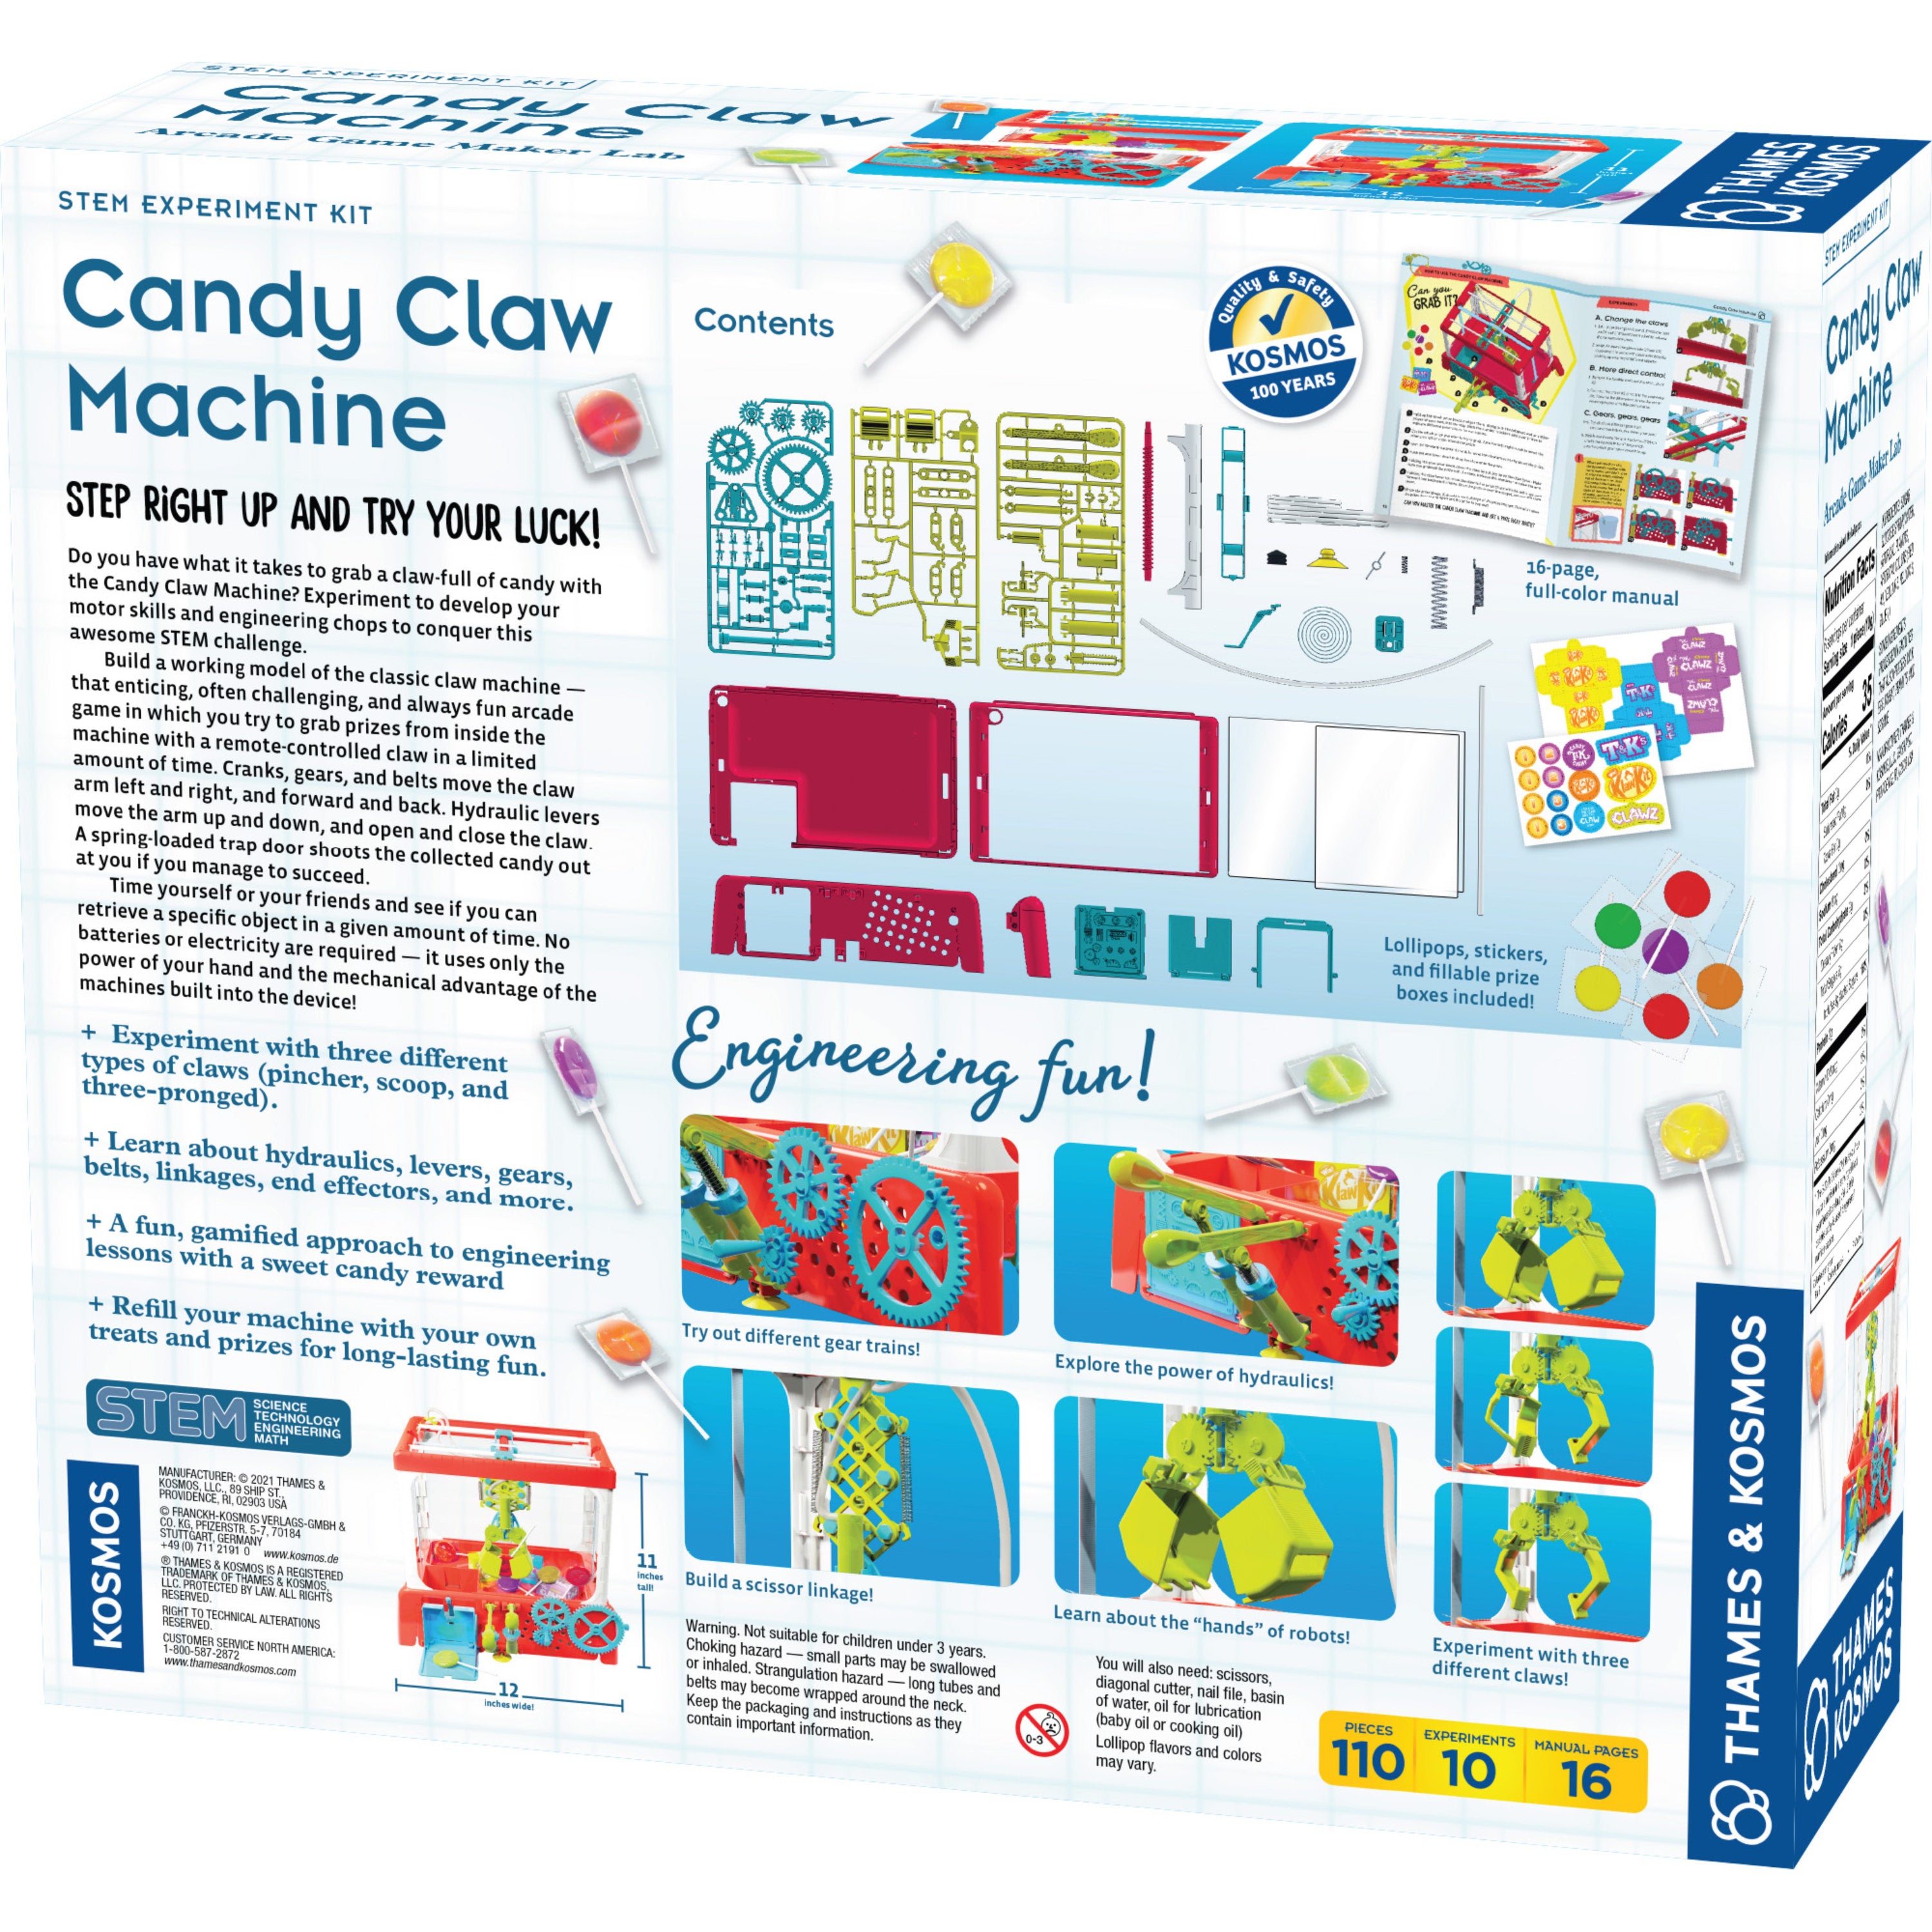 Candy Claw Machine - Arcade Game Maker Lab    